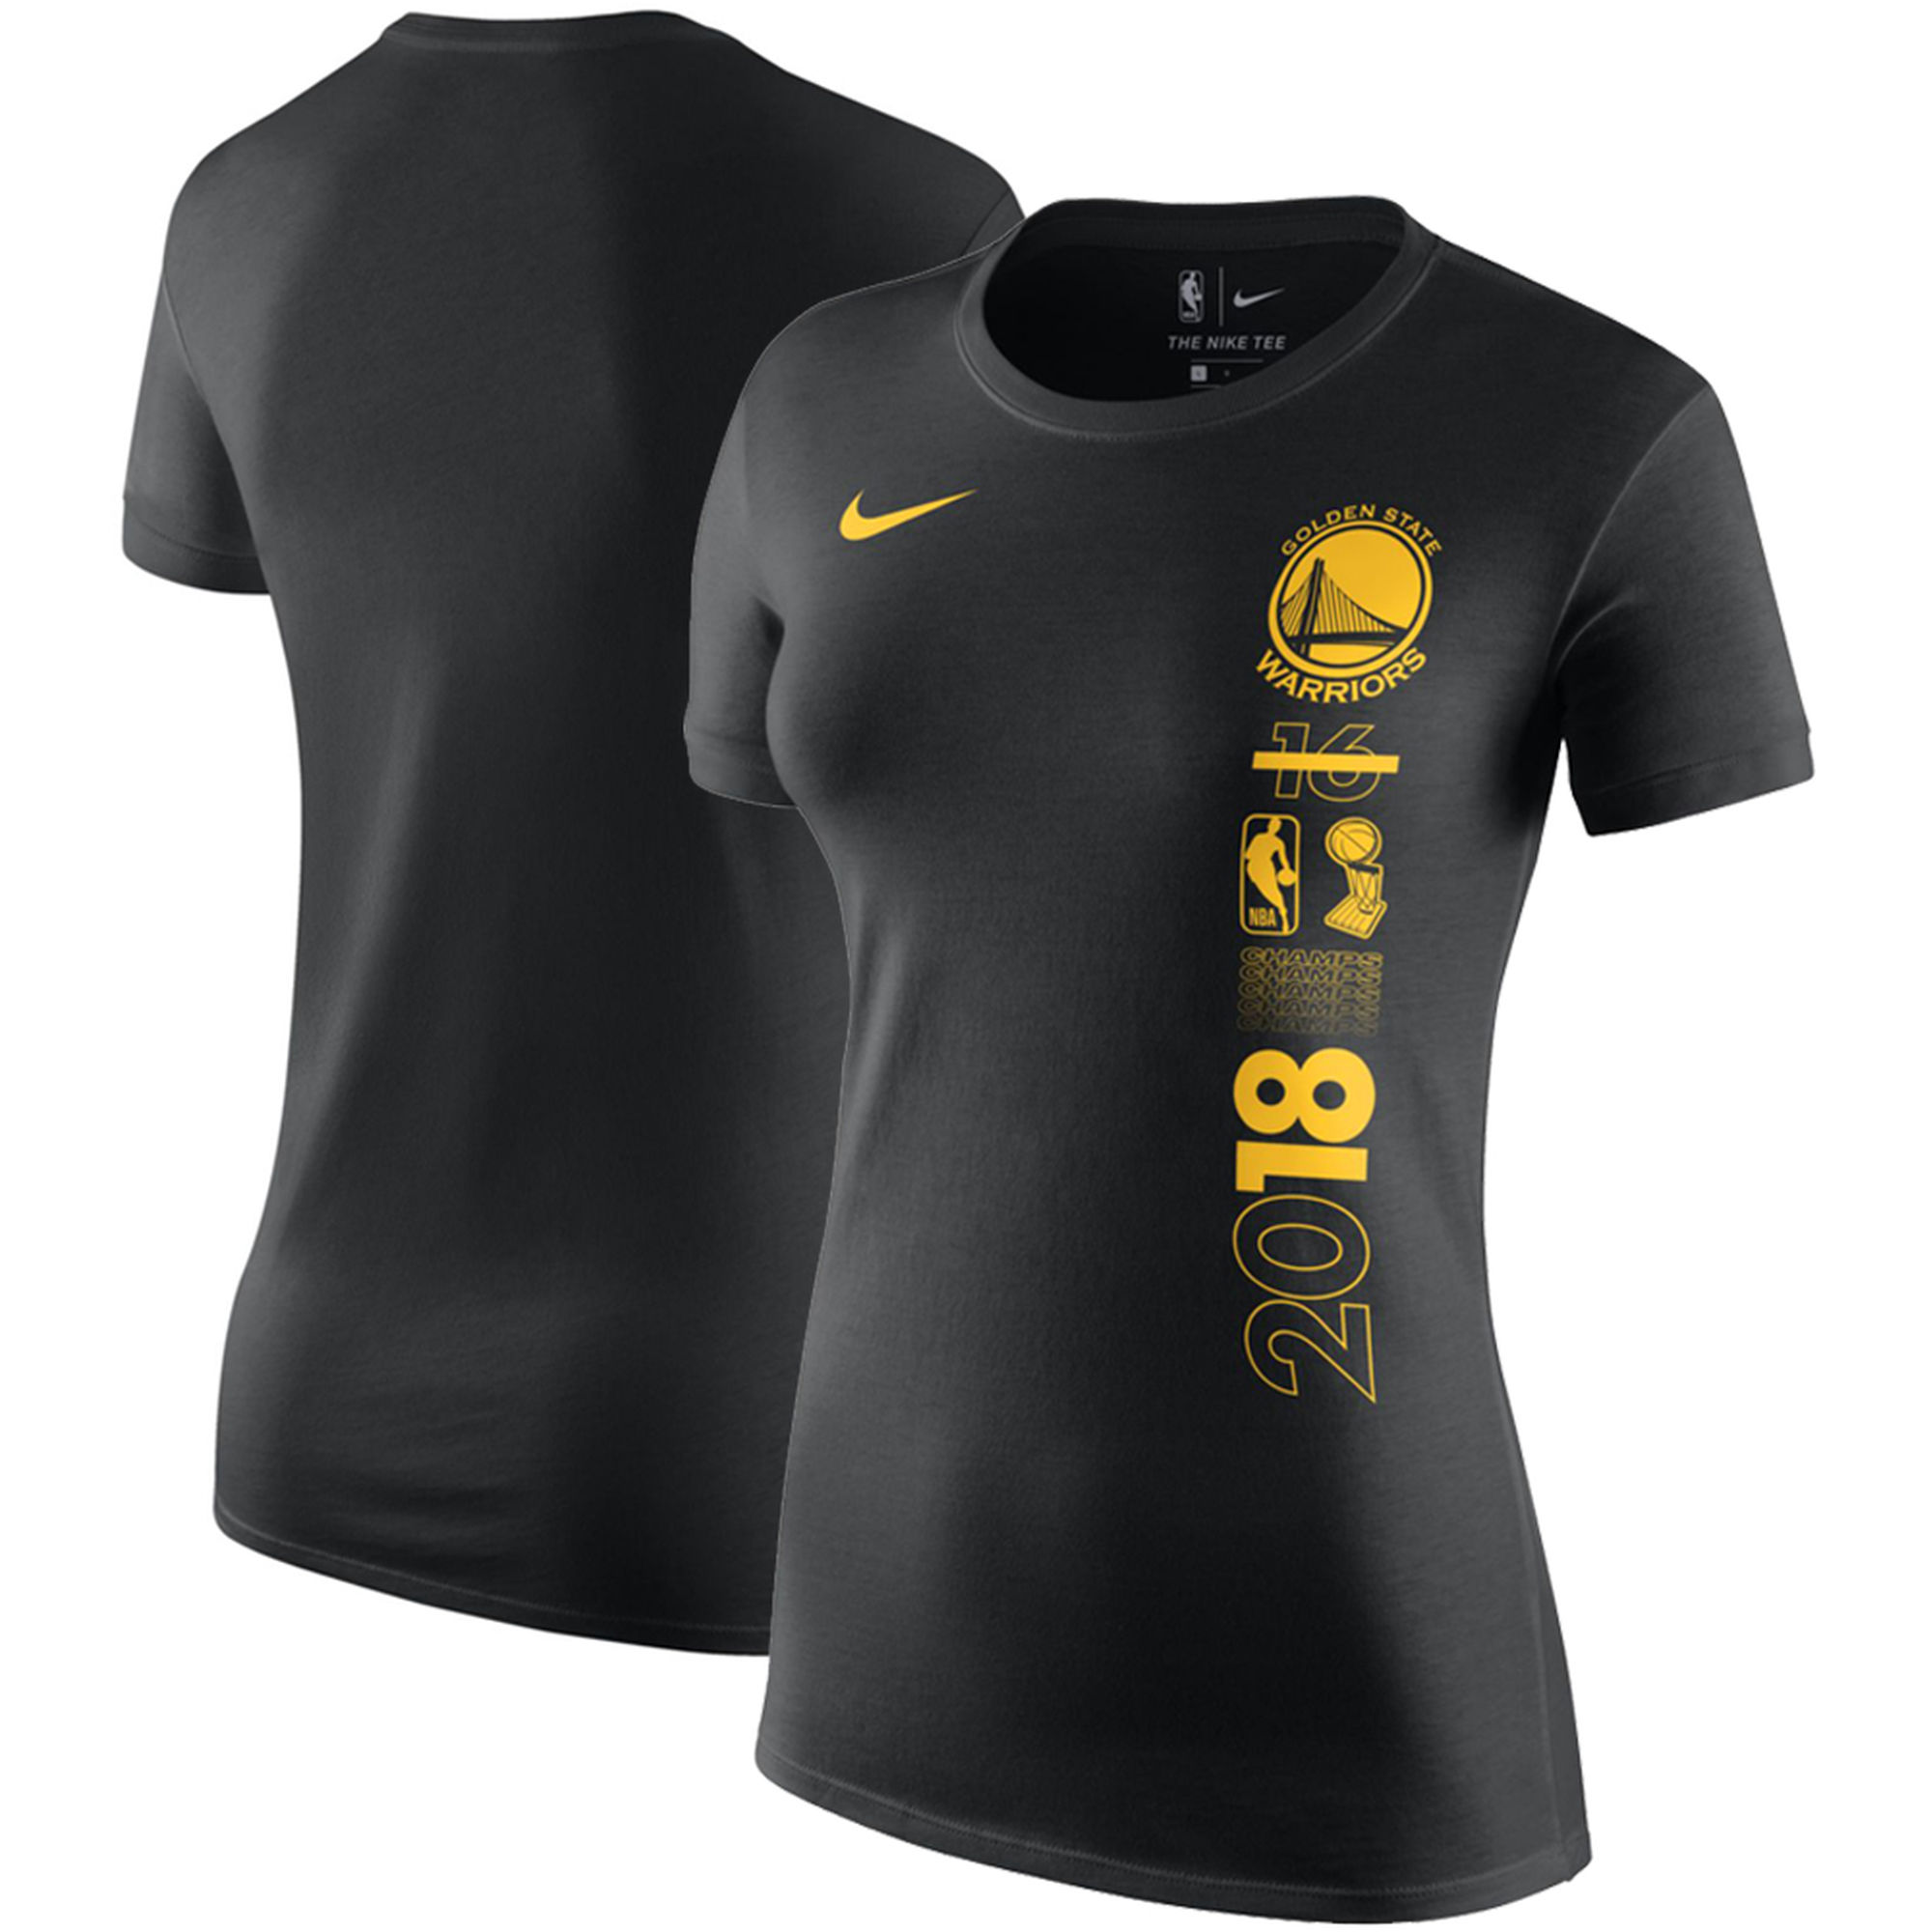 Golden State Warriors Nike Women's 2018 NBA Finals Champions Celebration Year DFCT T-Shirt Black